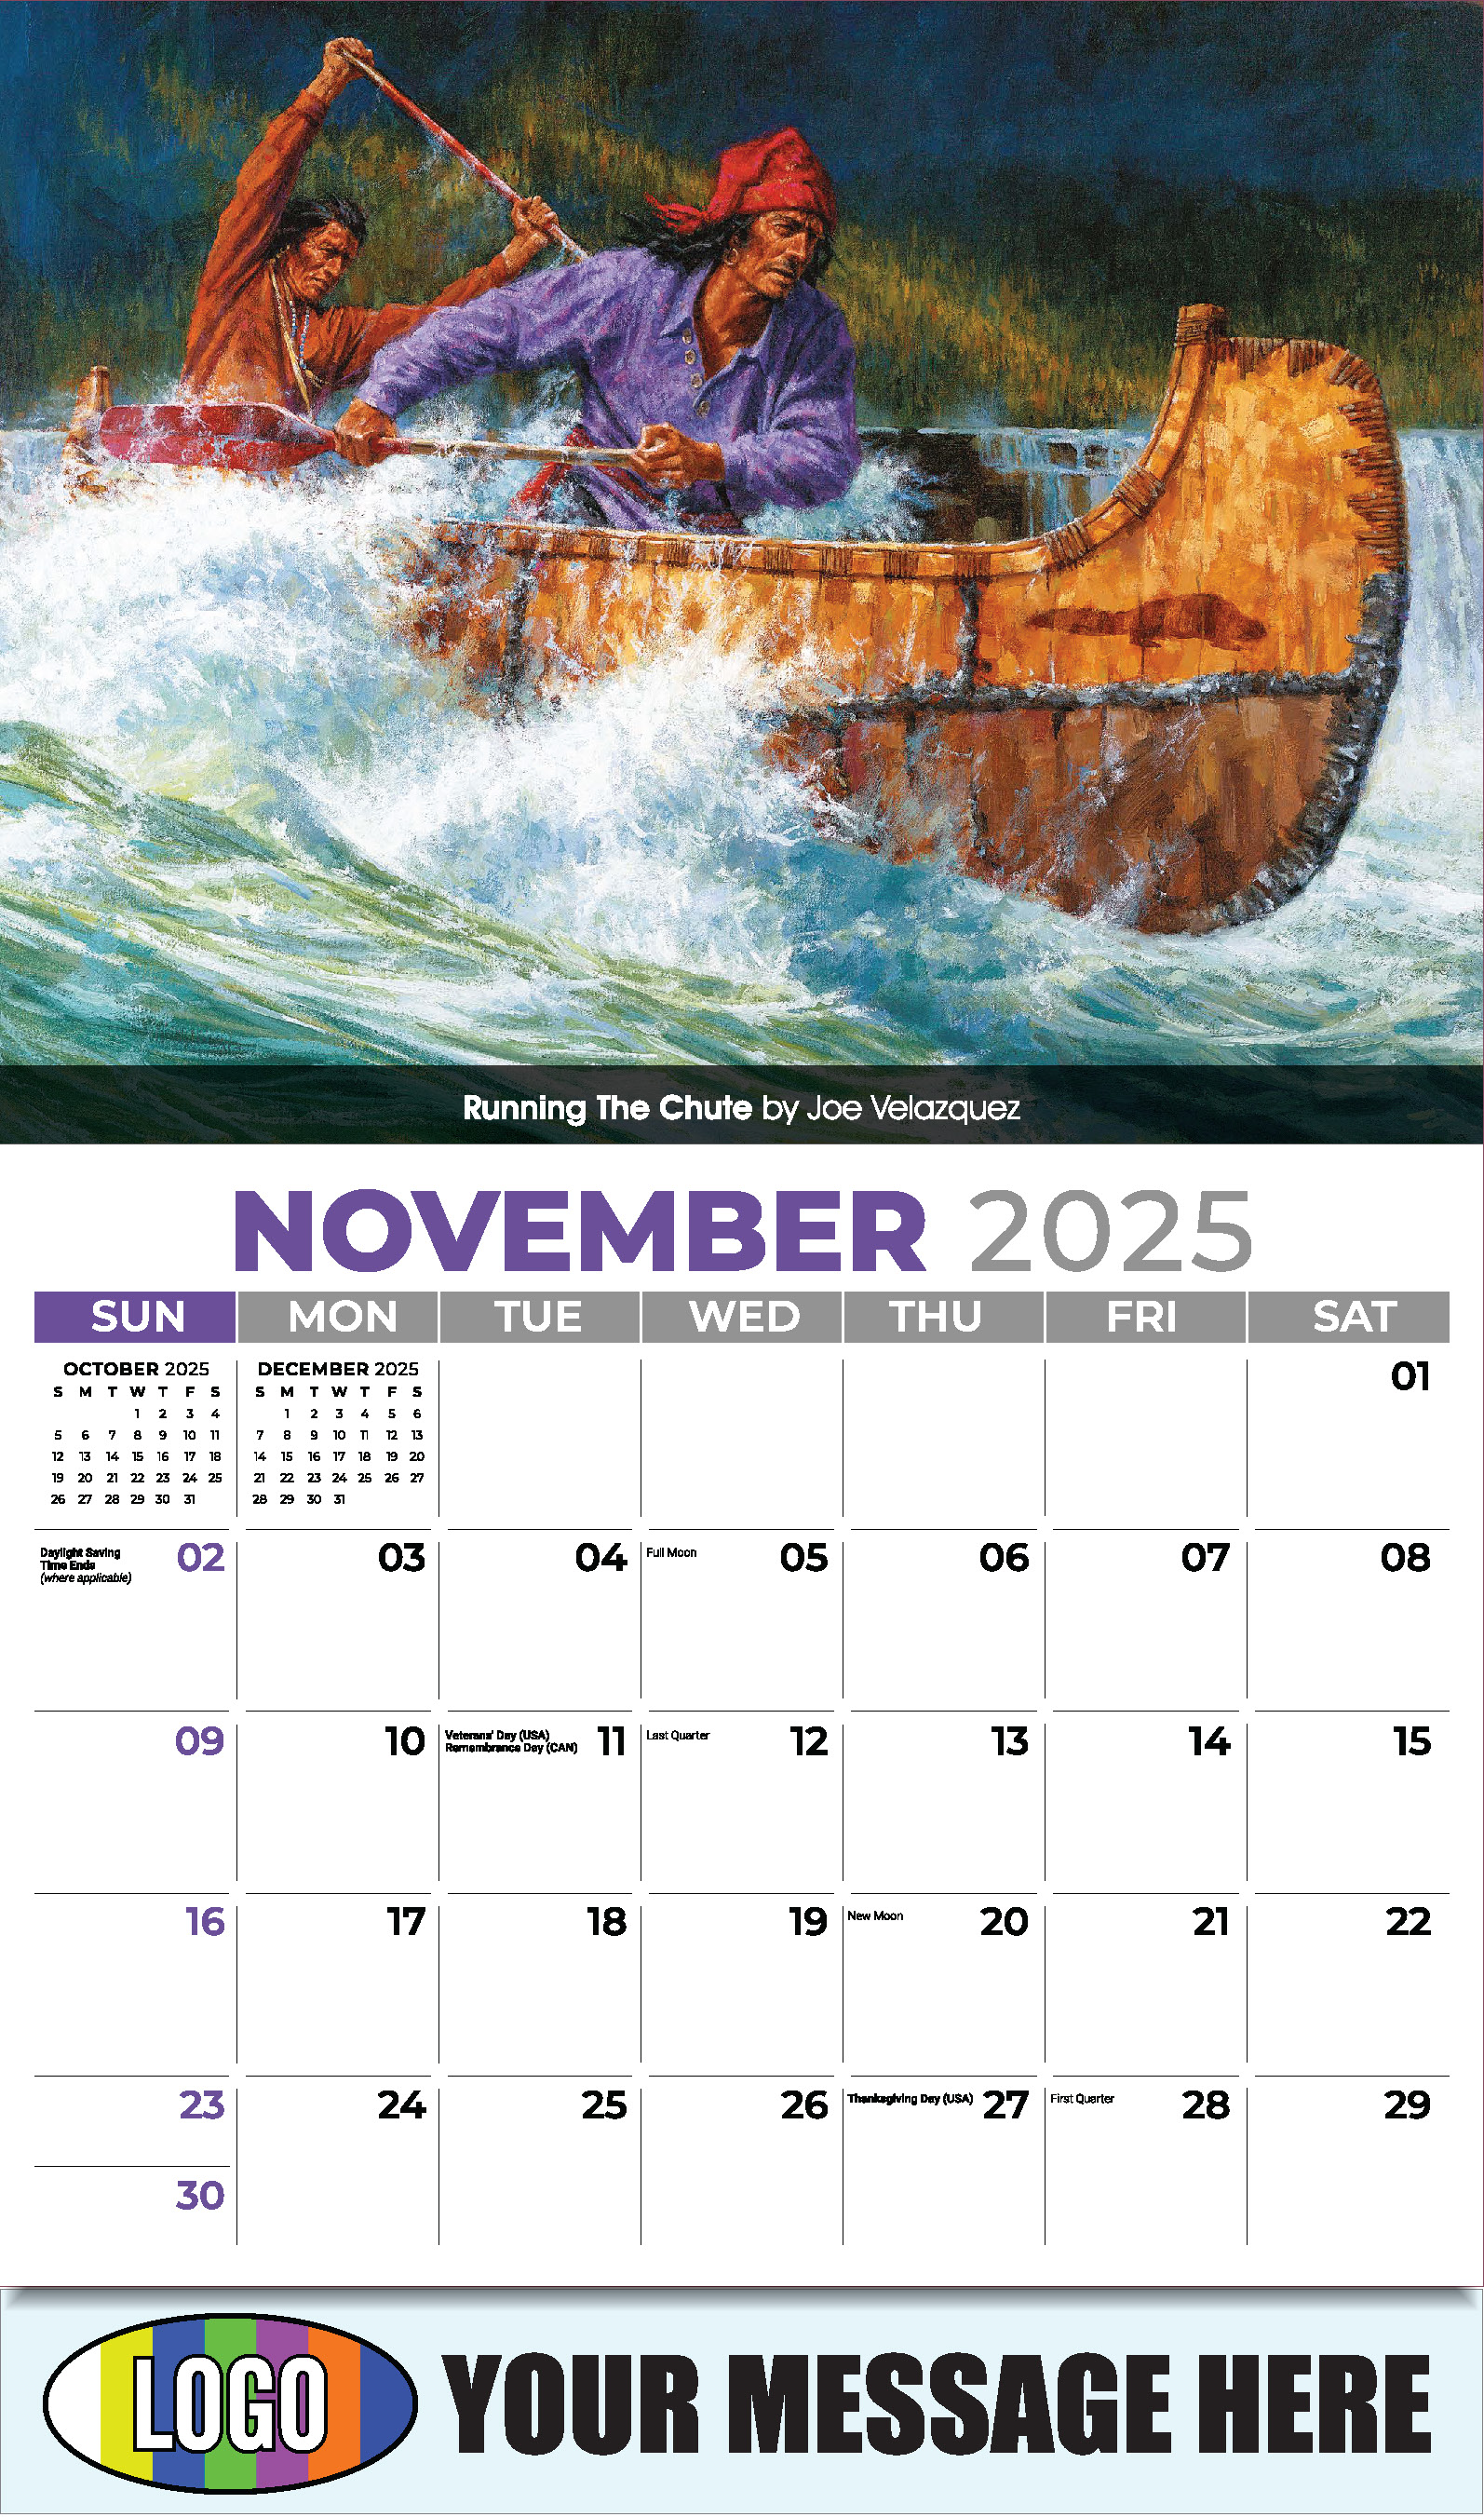 Spirit of the Old West 2025 Old West Art Business Promo Wall Calendar - November